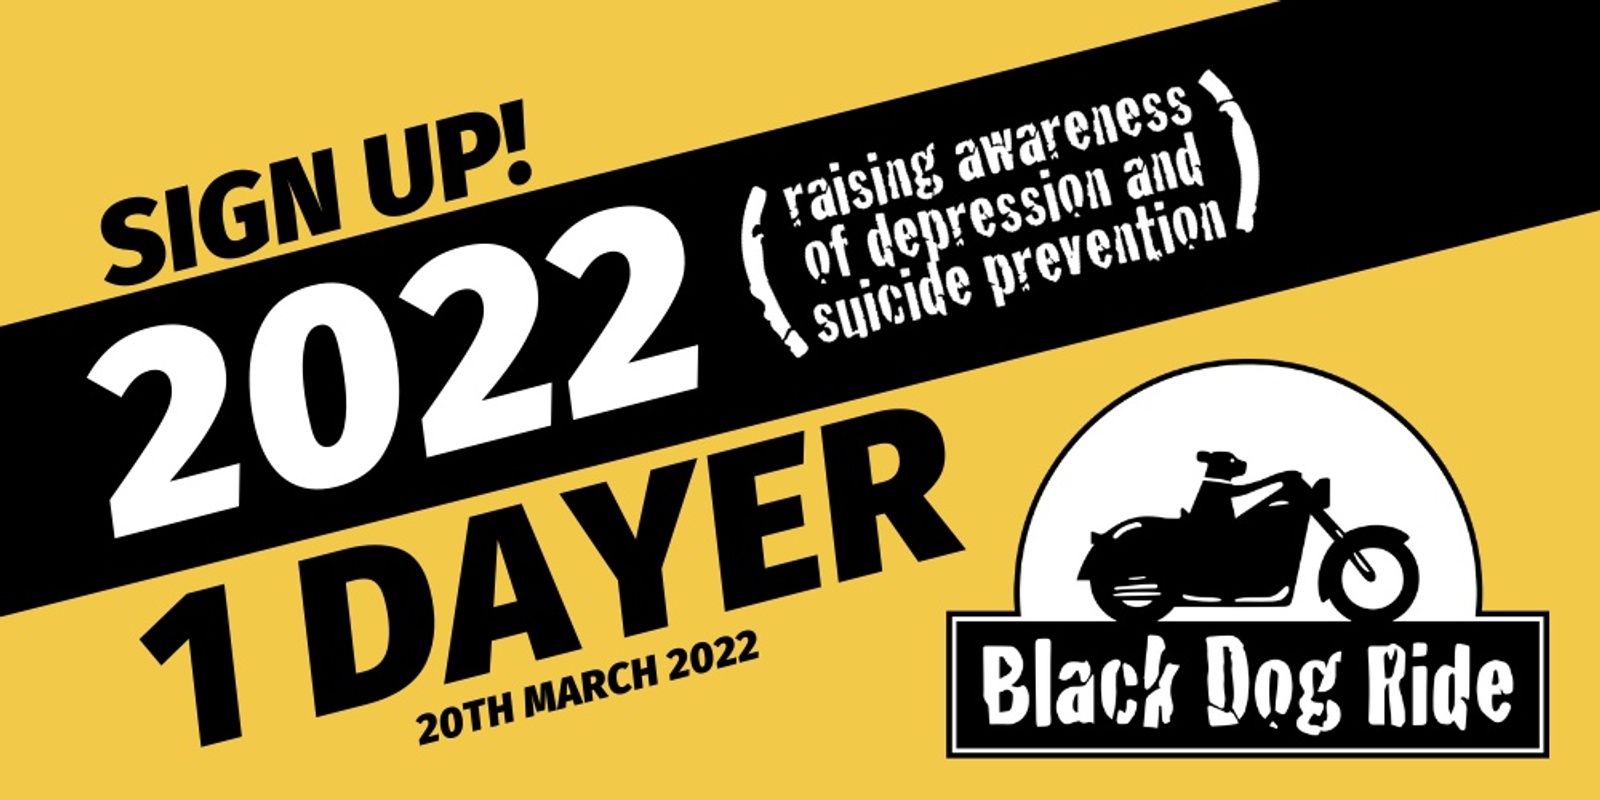 Banner image for Whitsundays - QLD - Black Dog Ride 1 Dayer 2022